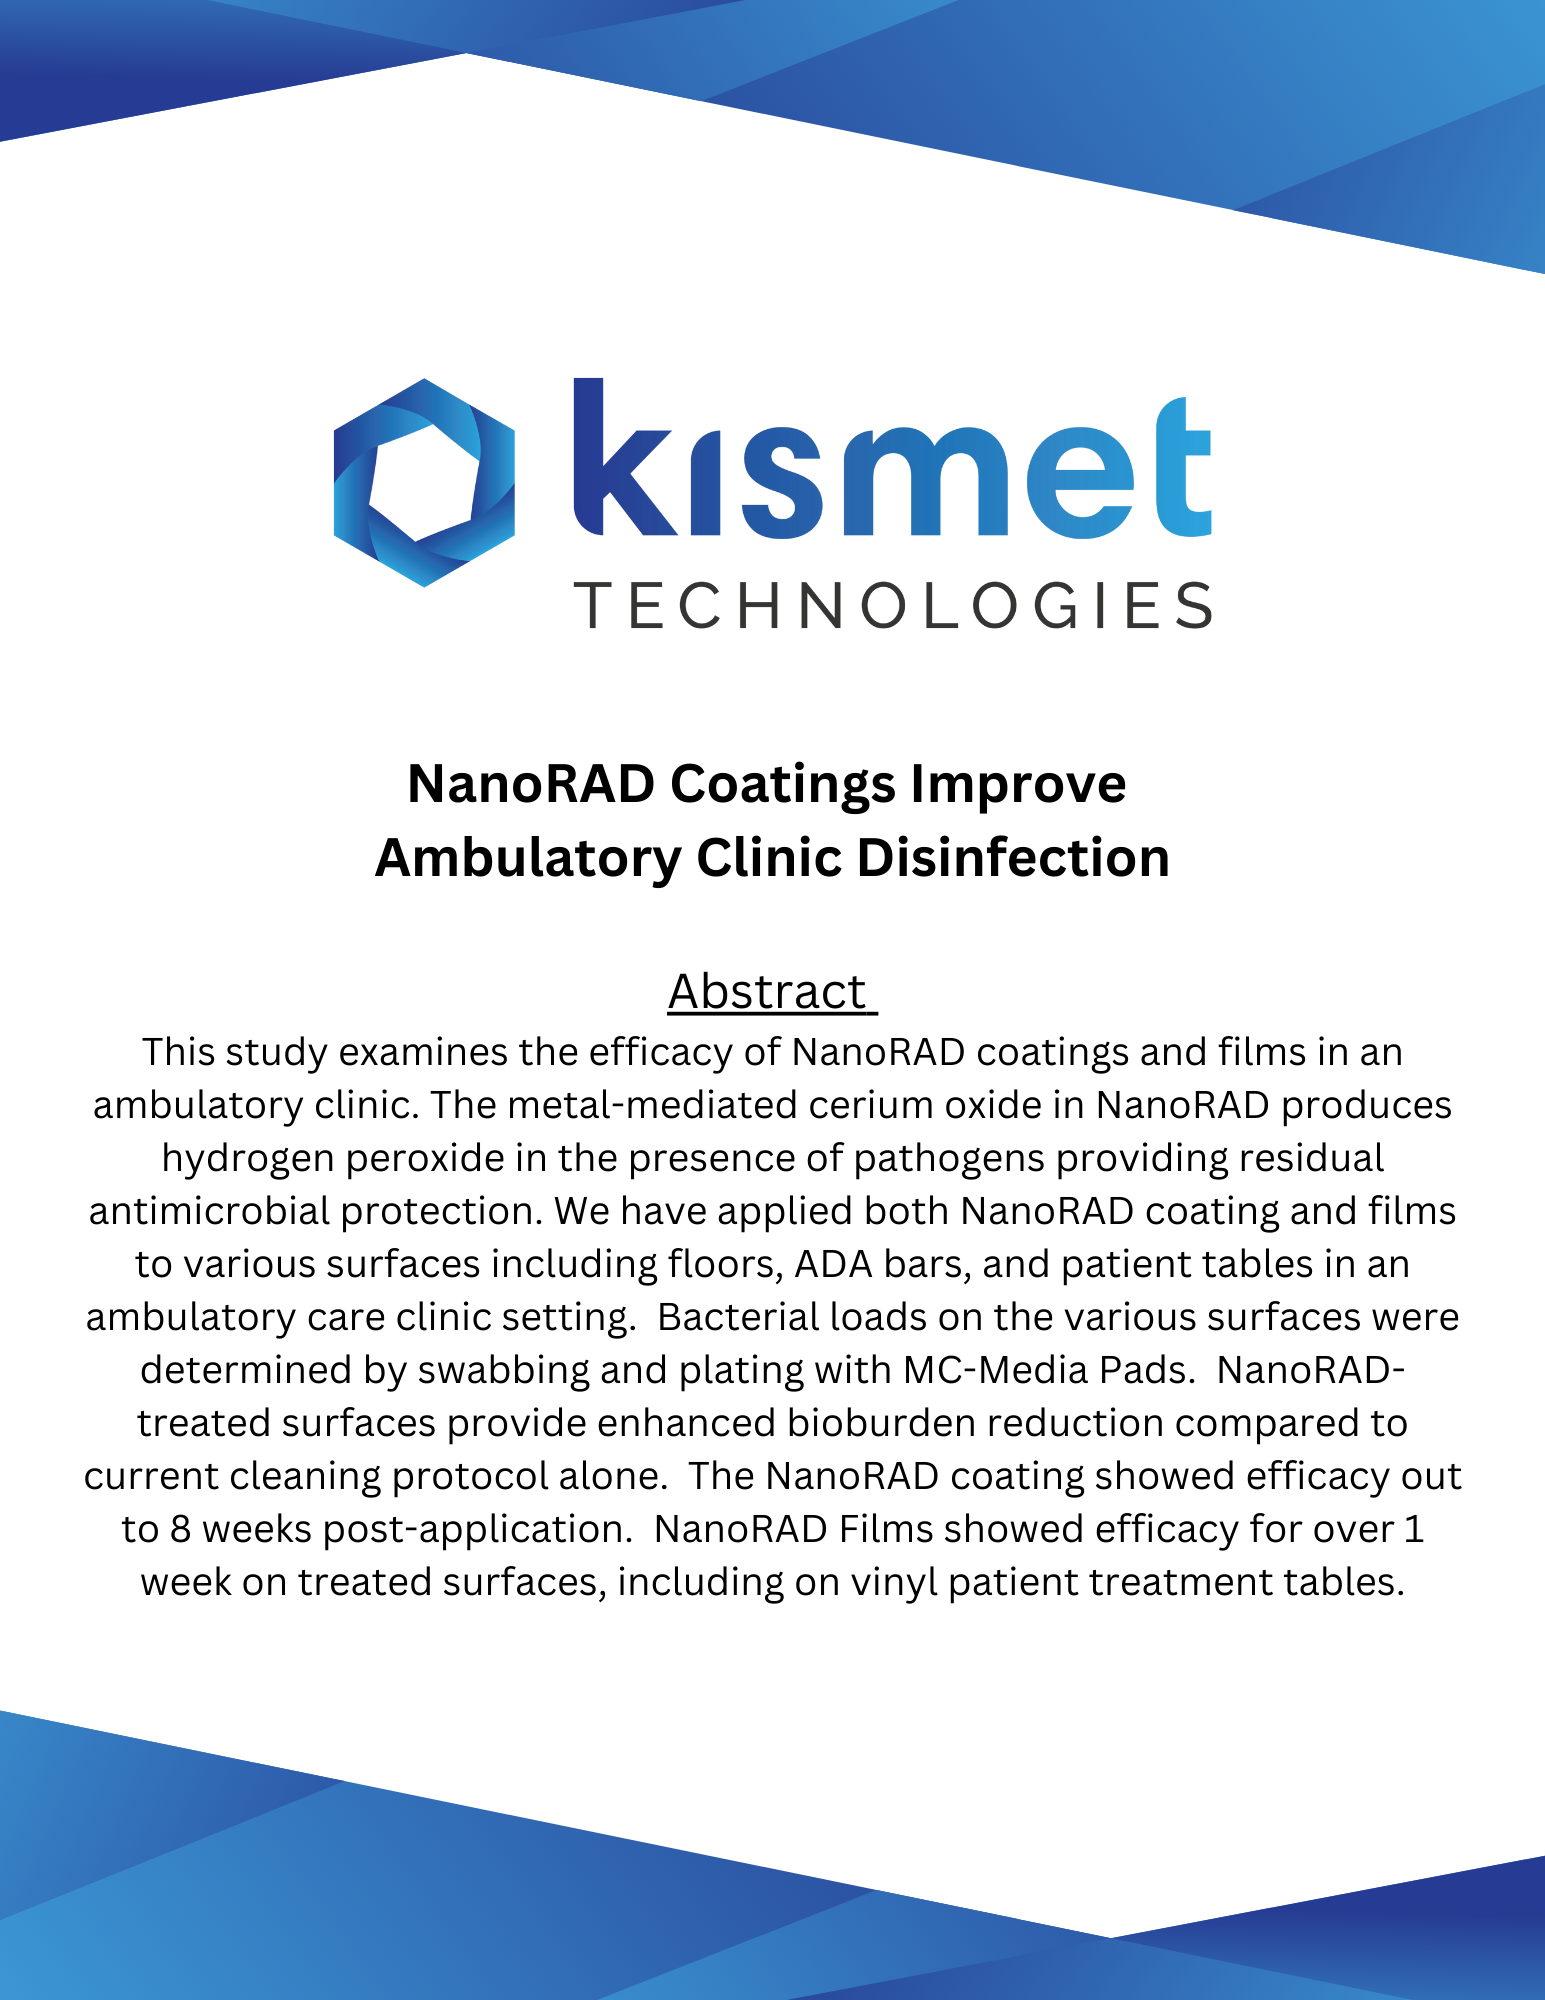 Kismet Technologies coatings improve ambulatory clinic disinfection